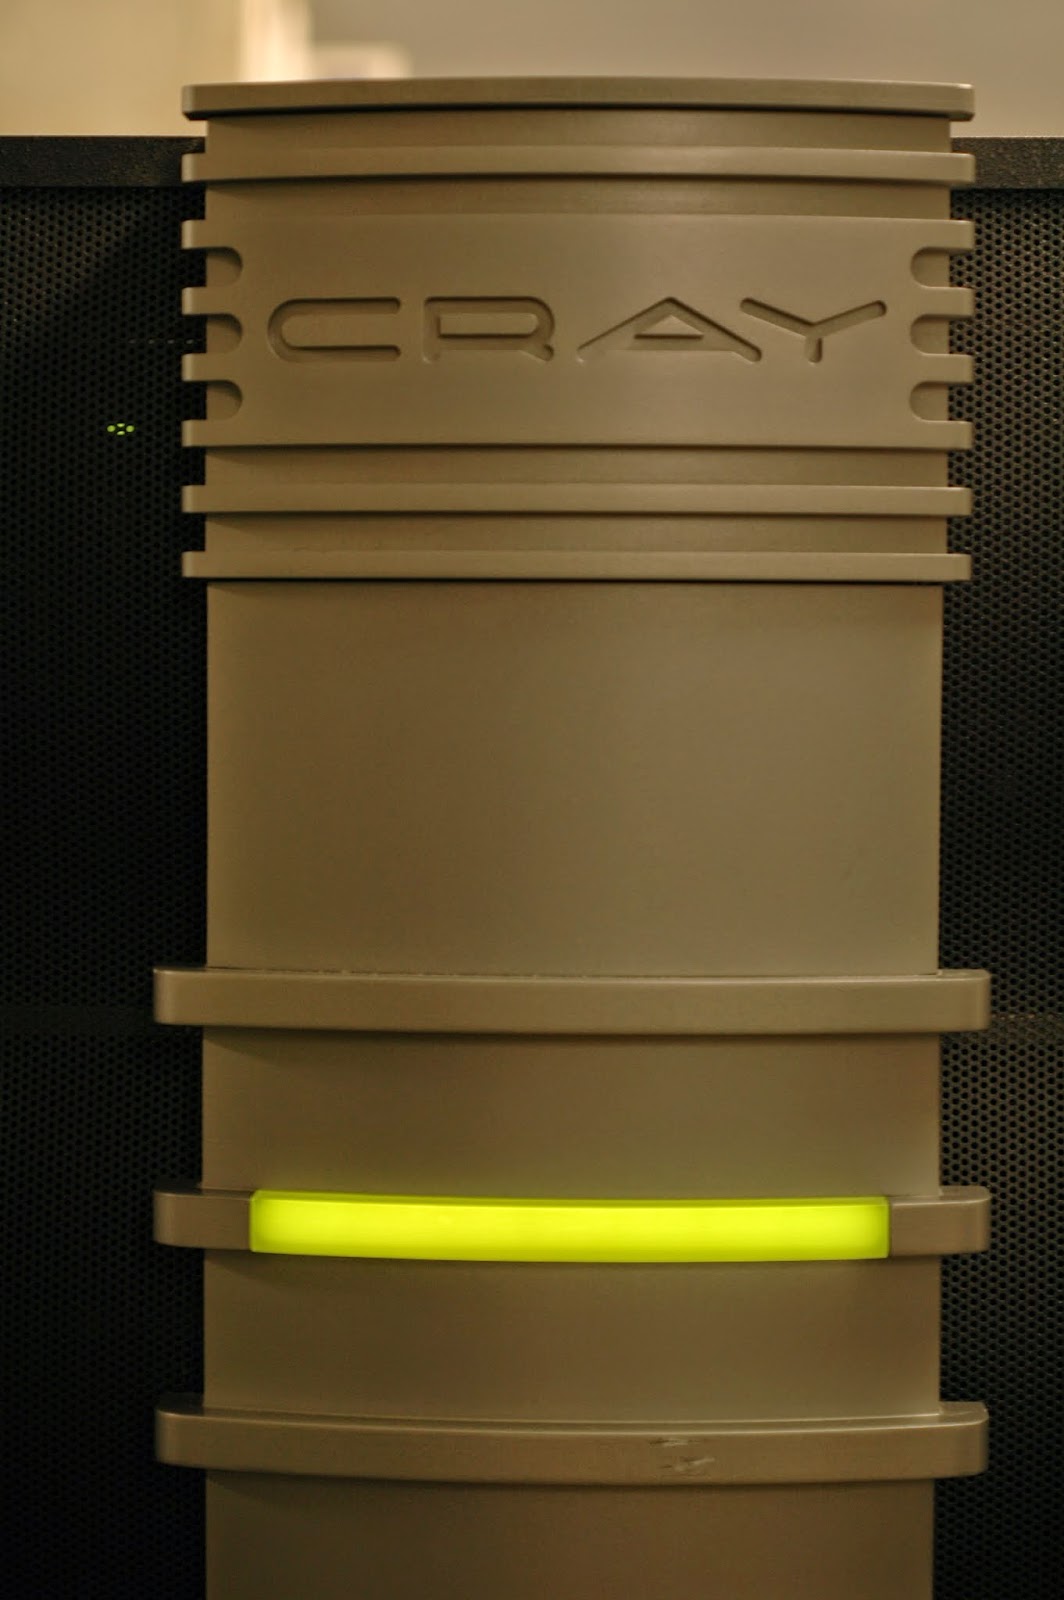 Cray J916